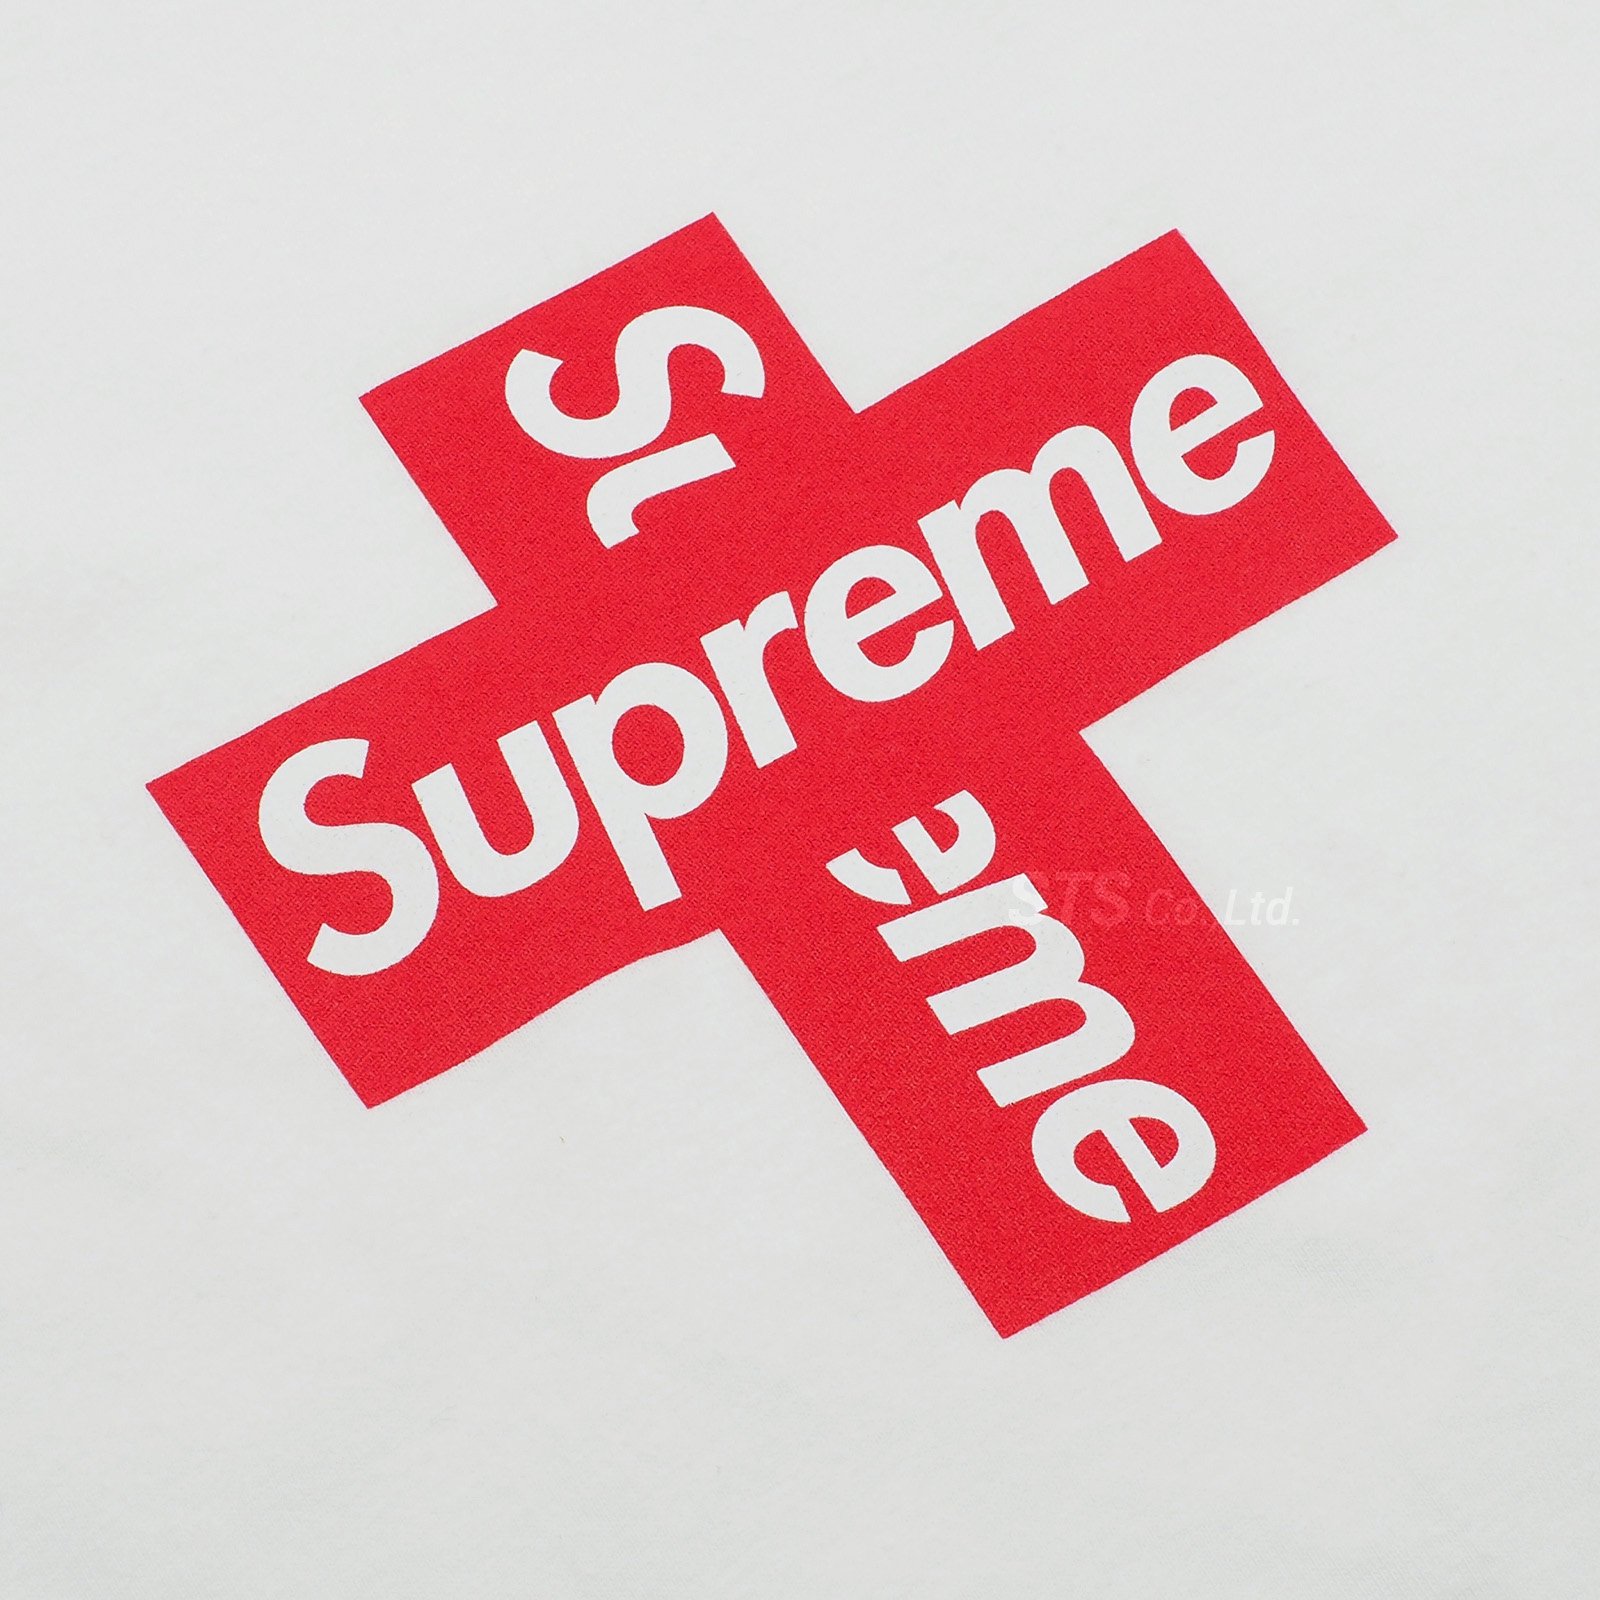 Cross Box Logo Tee supreme XL